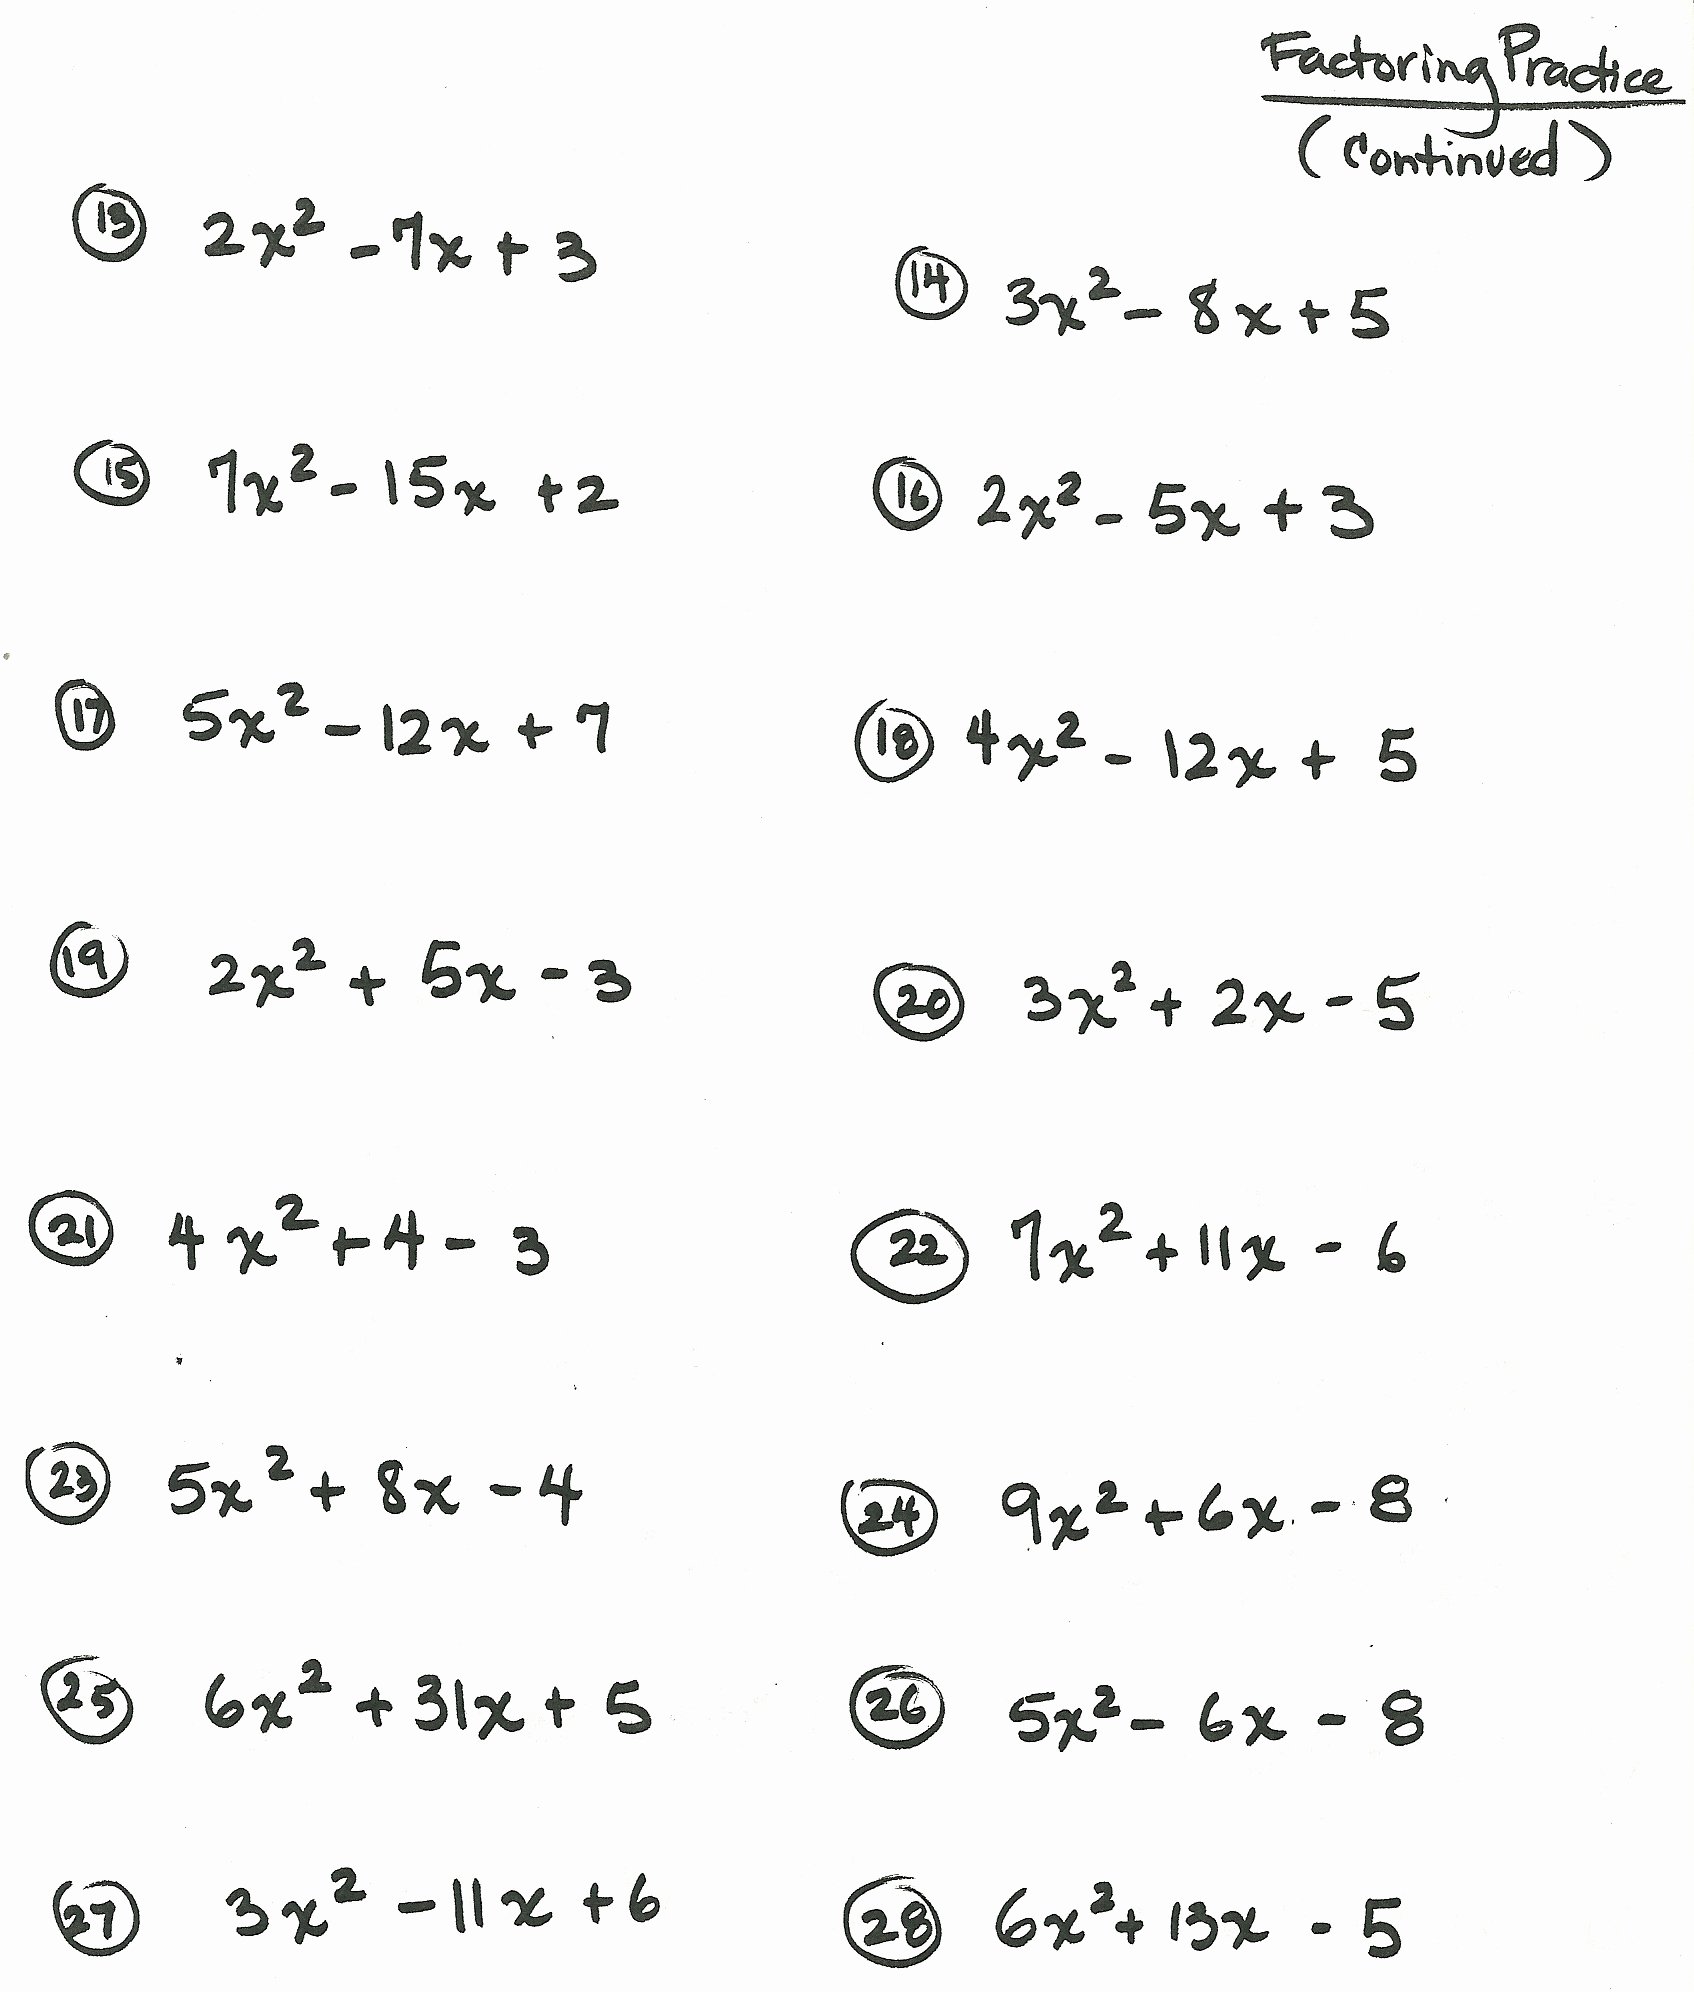 Factoring Worksheet Algebra 1 Best Of Algebra Worksheet New 187 Algebra Worksheet Factoring